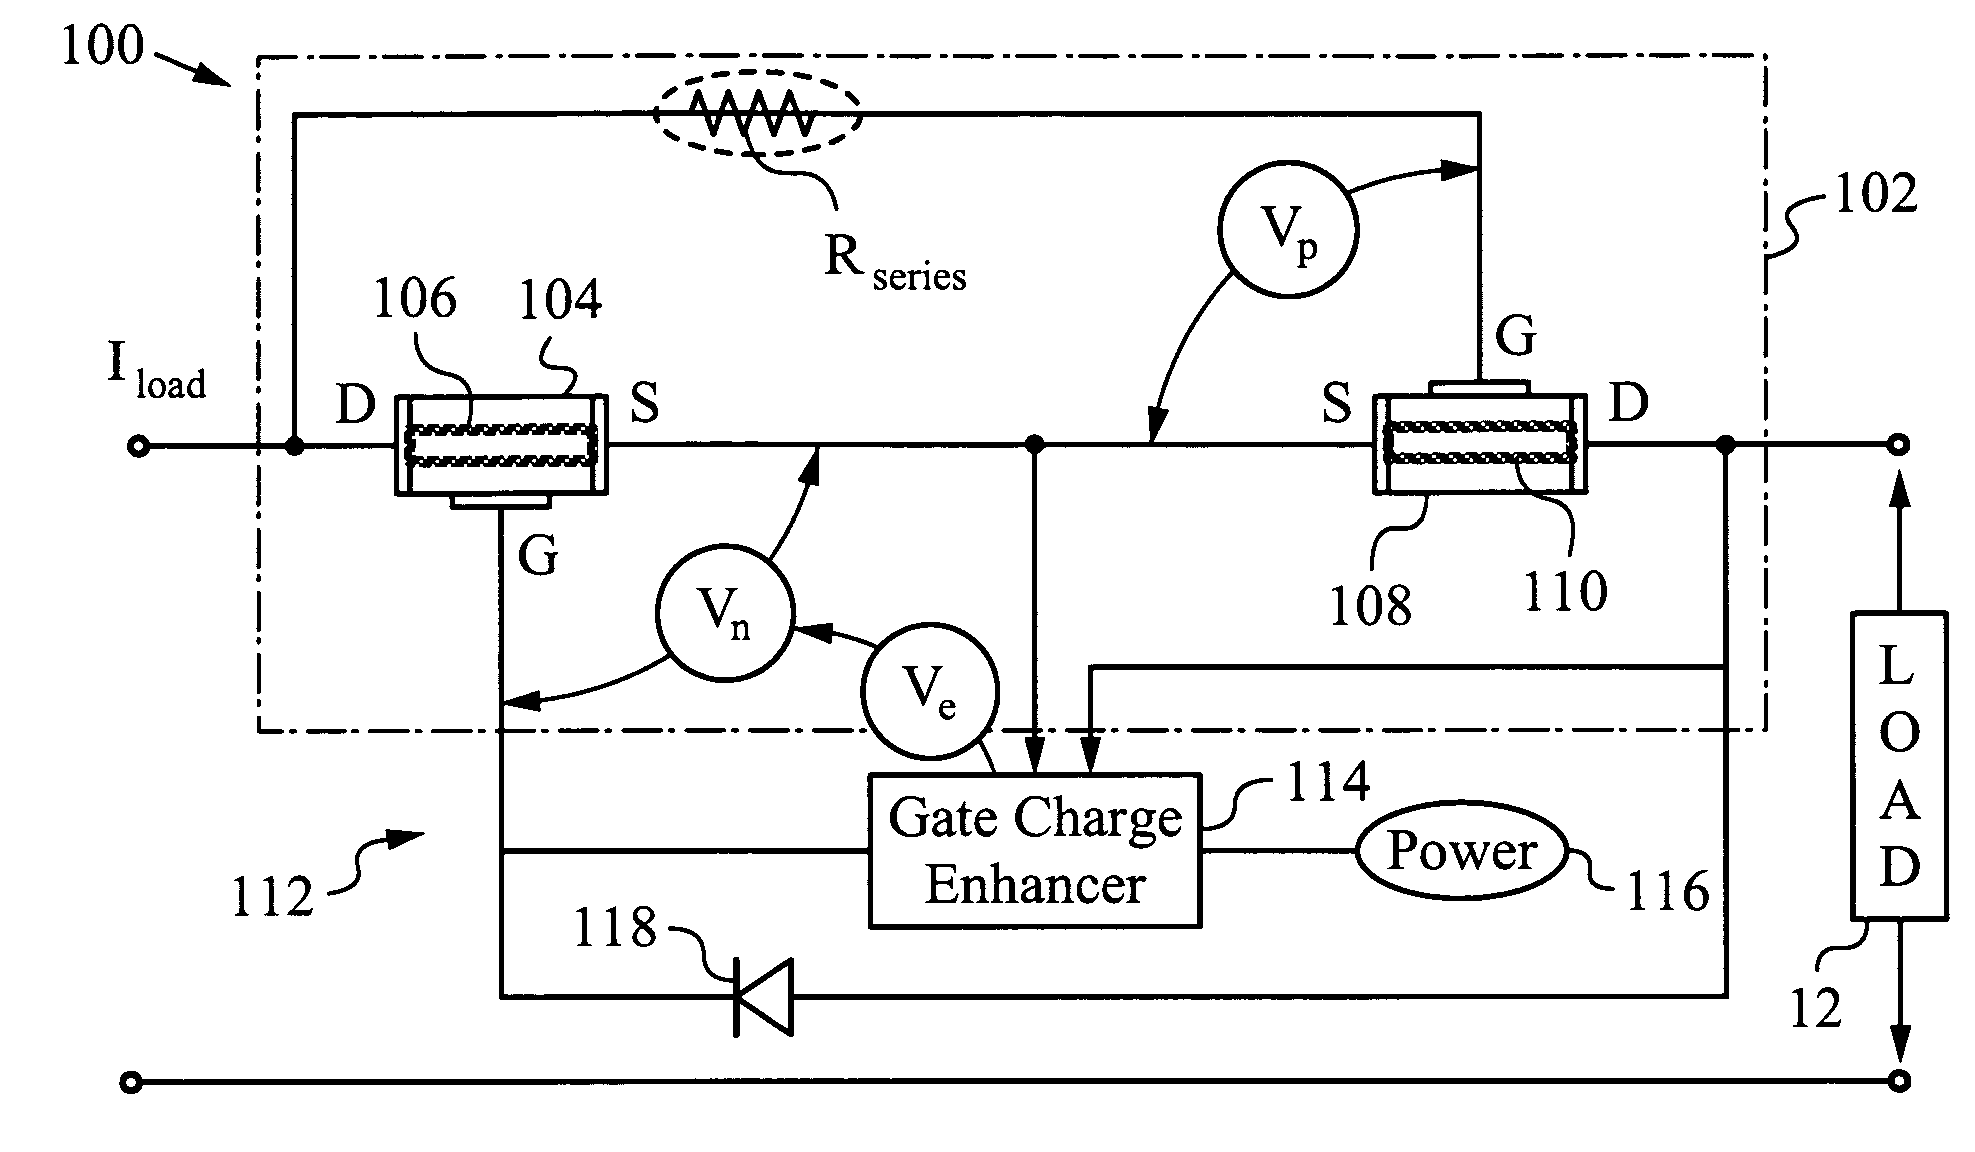 Apparatus and method for enhanced transient blocking